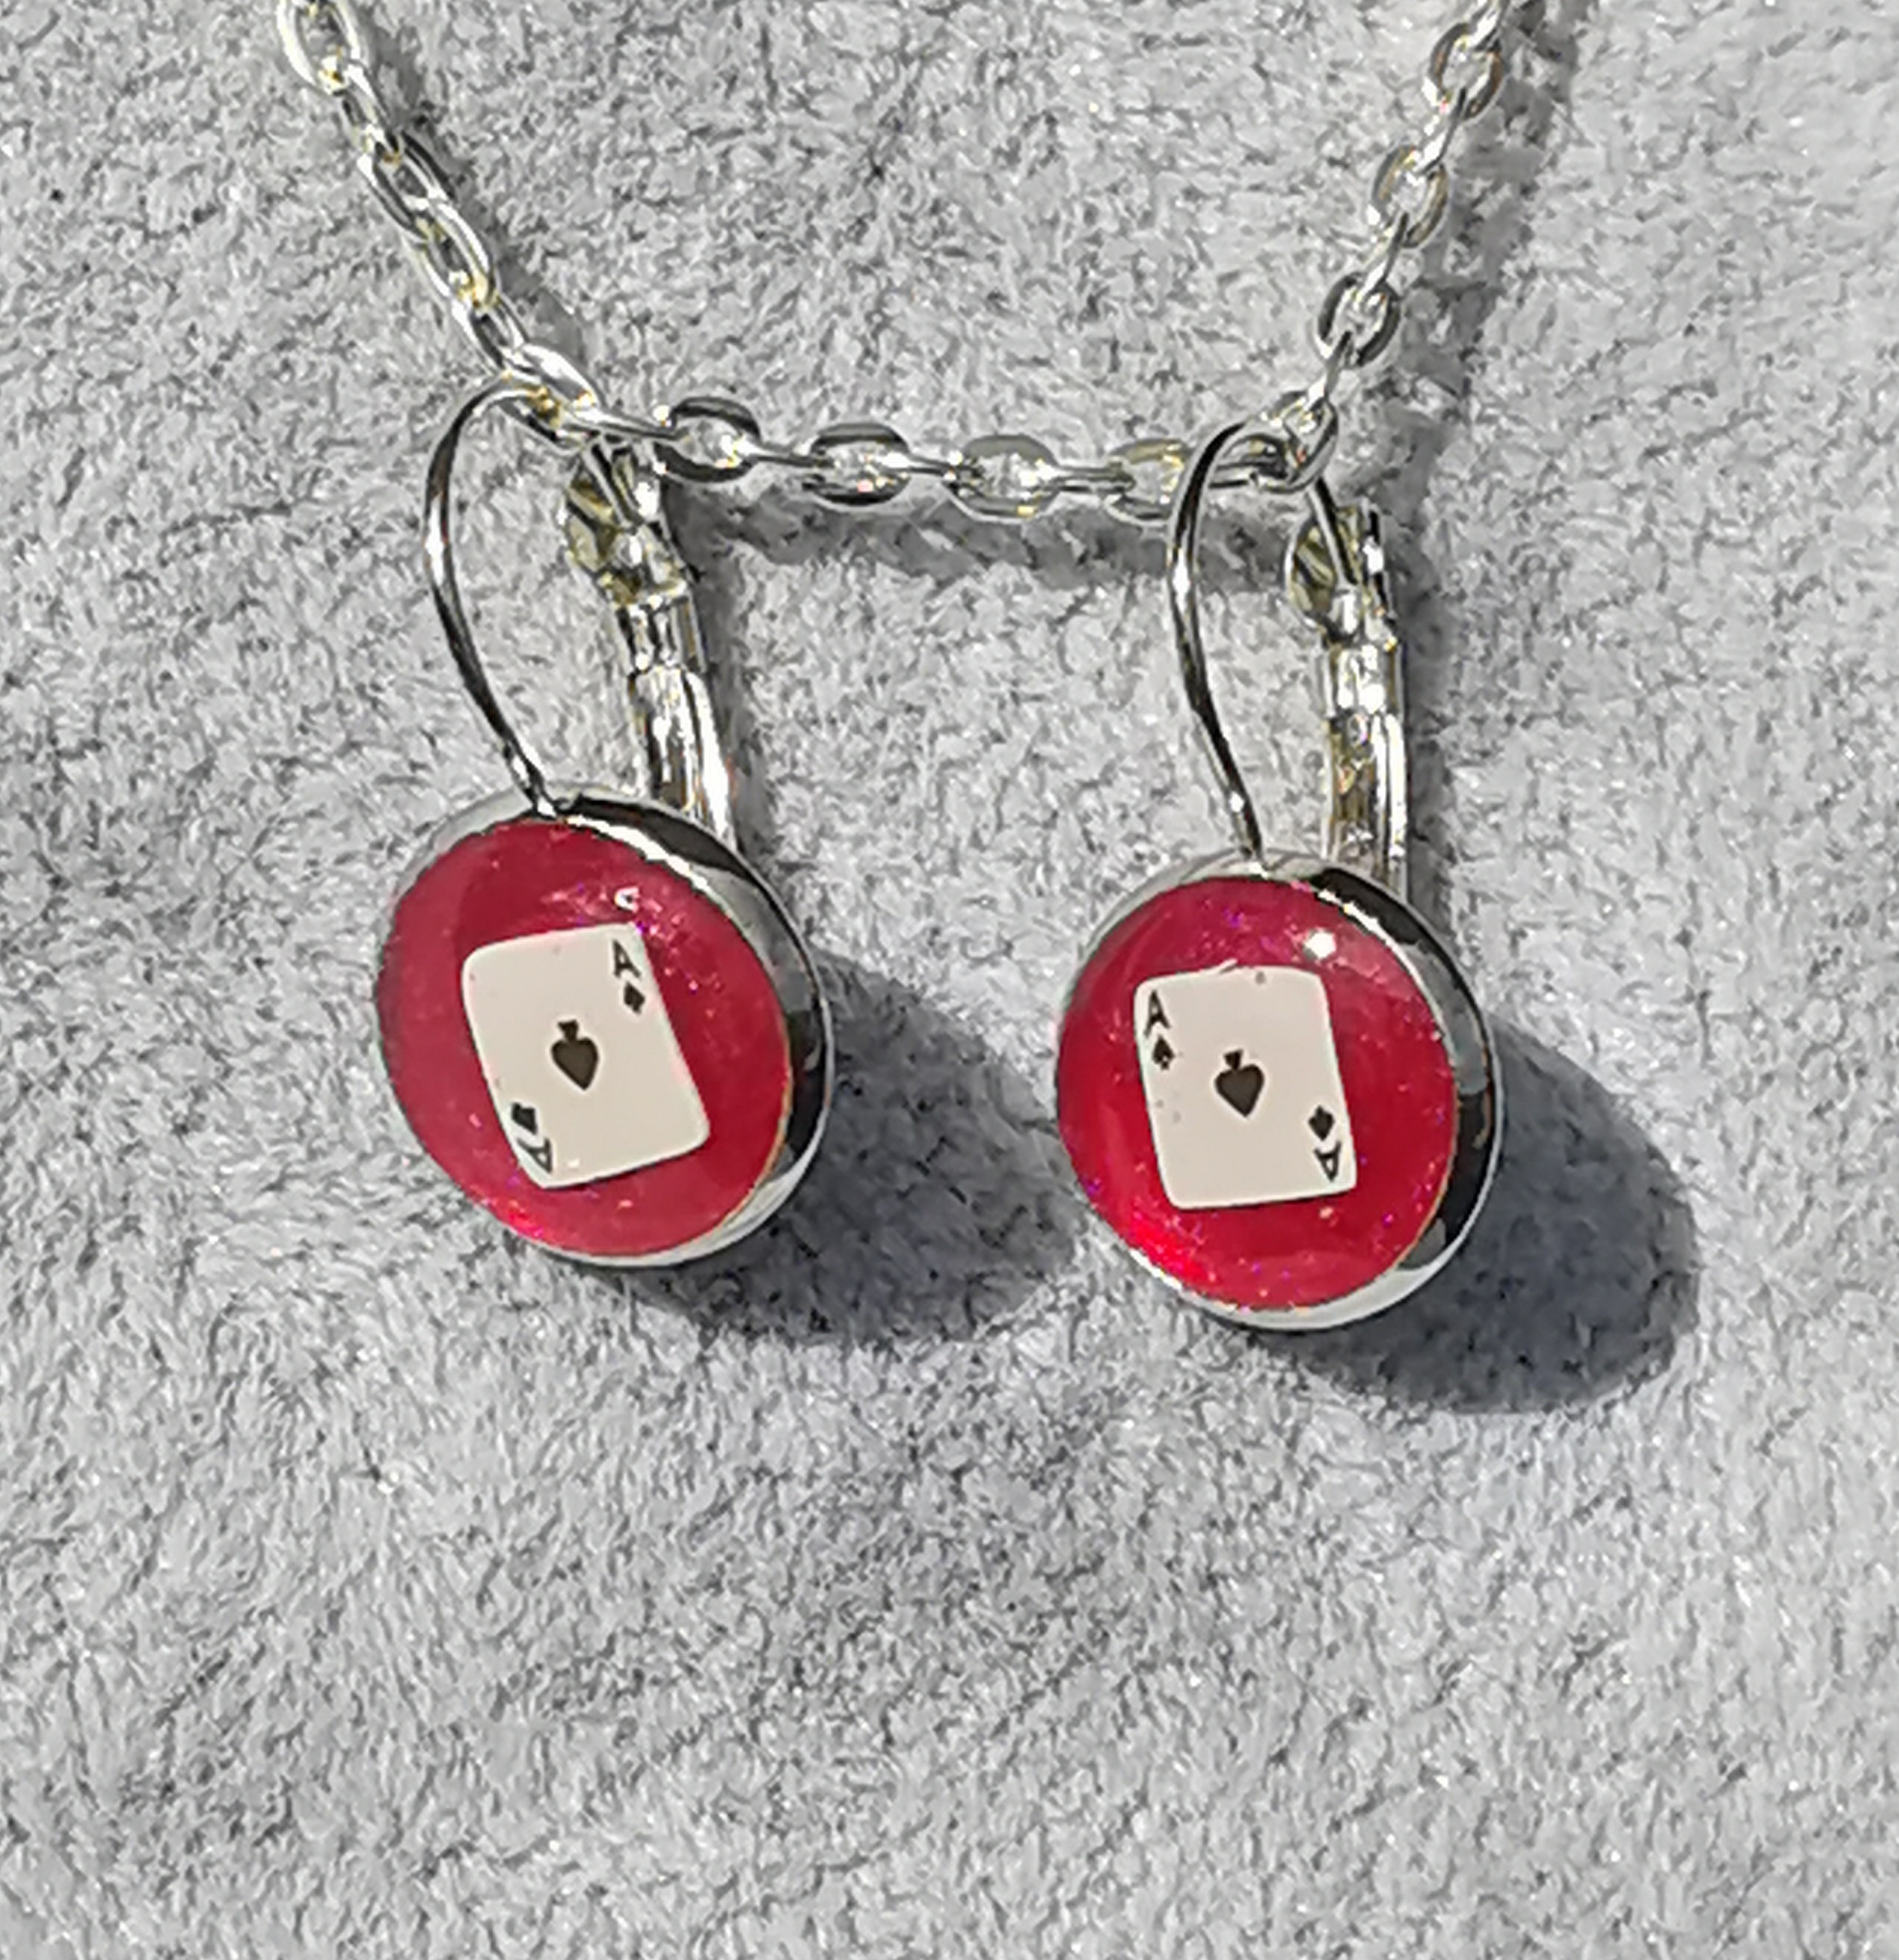 9120 - Red Ace of Spades Earrings